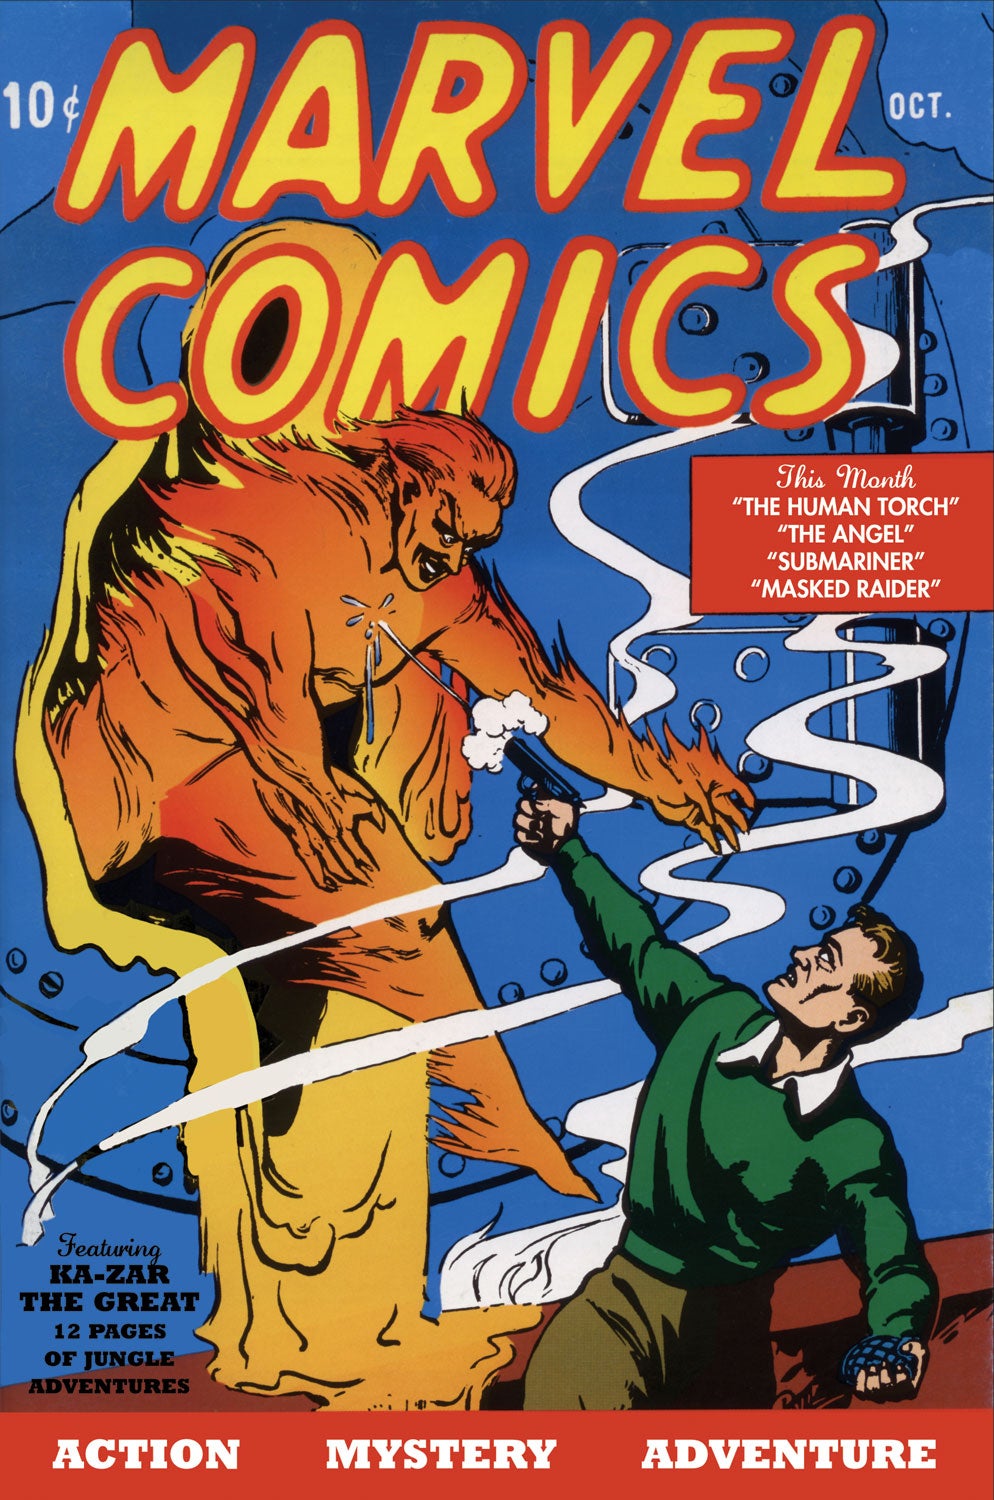 Marvel Comics #1 featuring artwork by Carl Burgos, Al Anders, Bill Everett, and Paul Gustavson (Image: Marvel Comics)